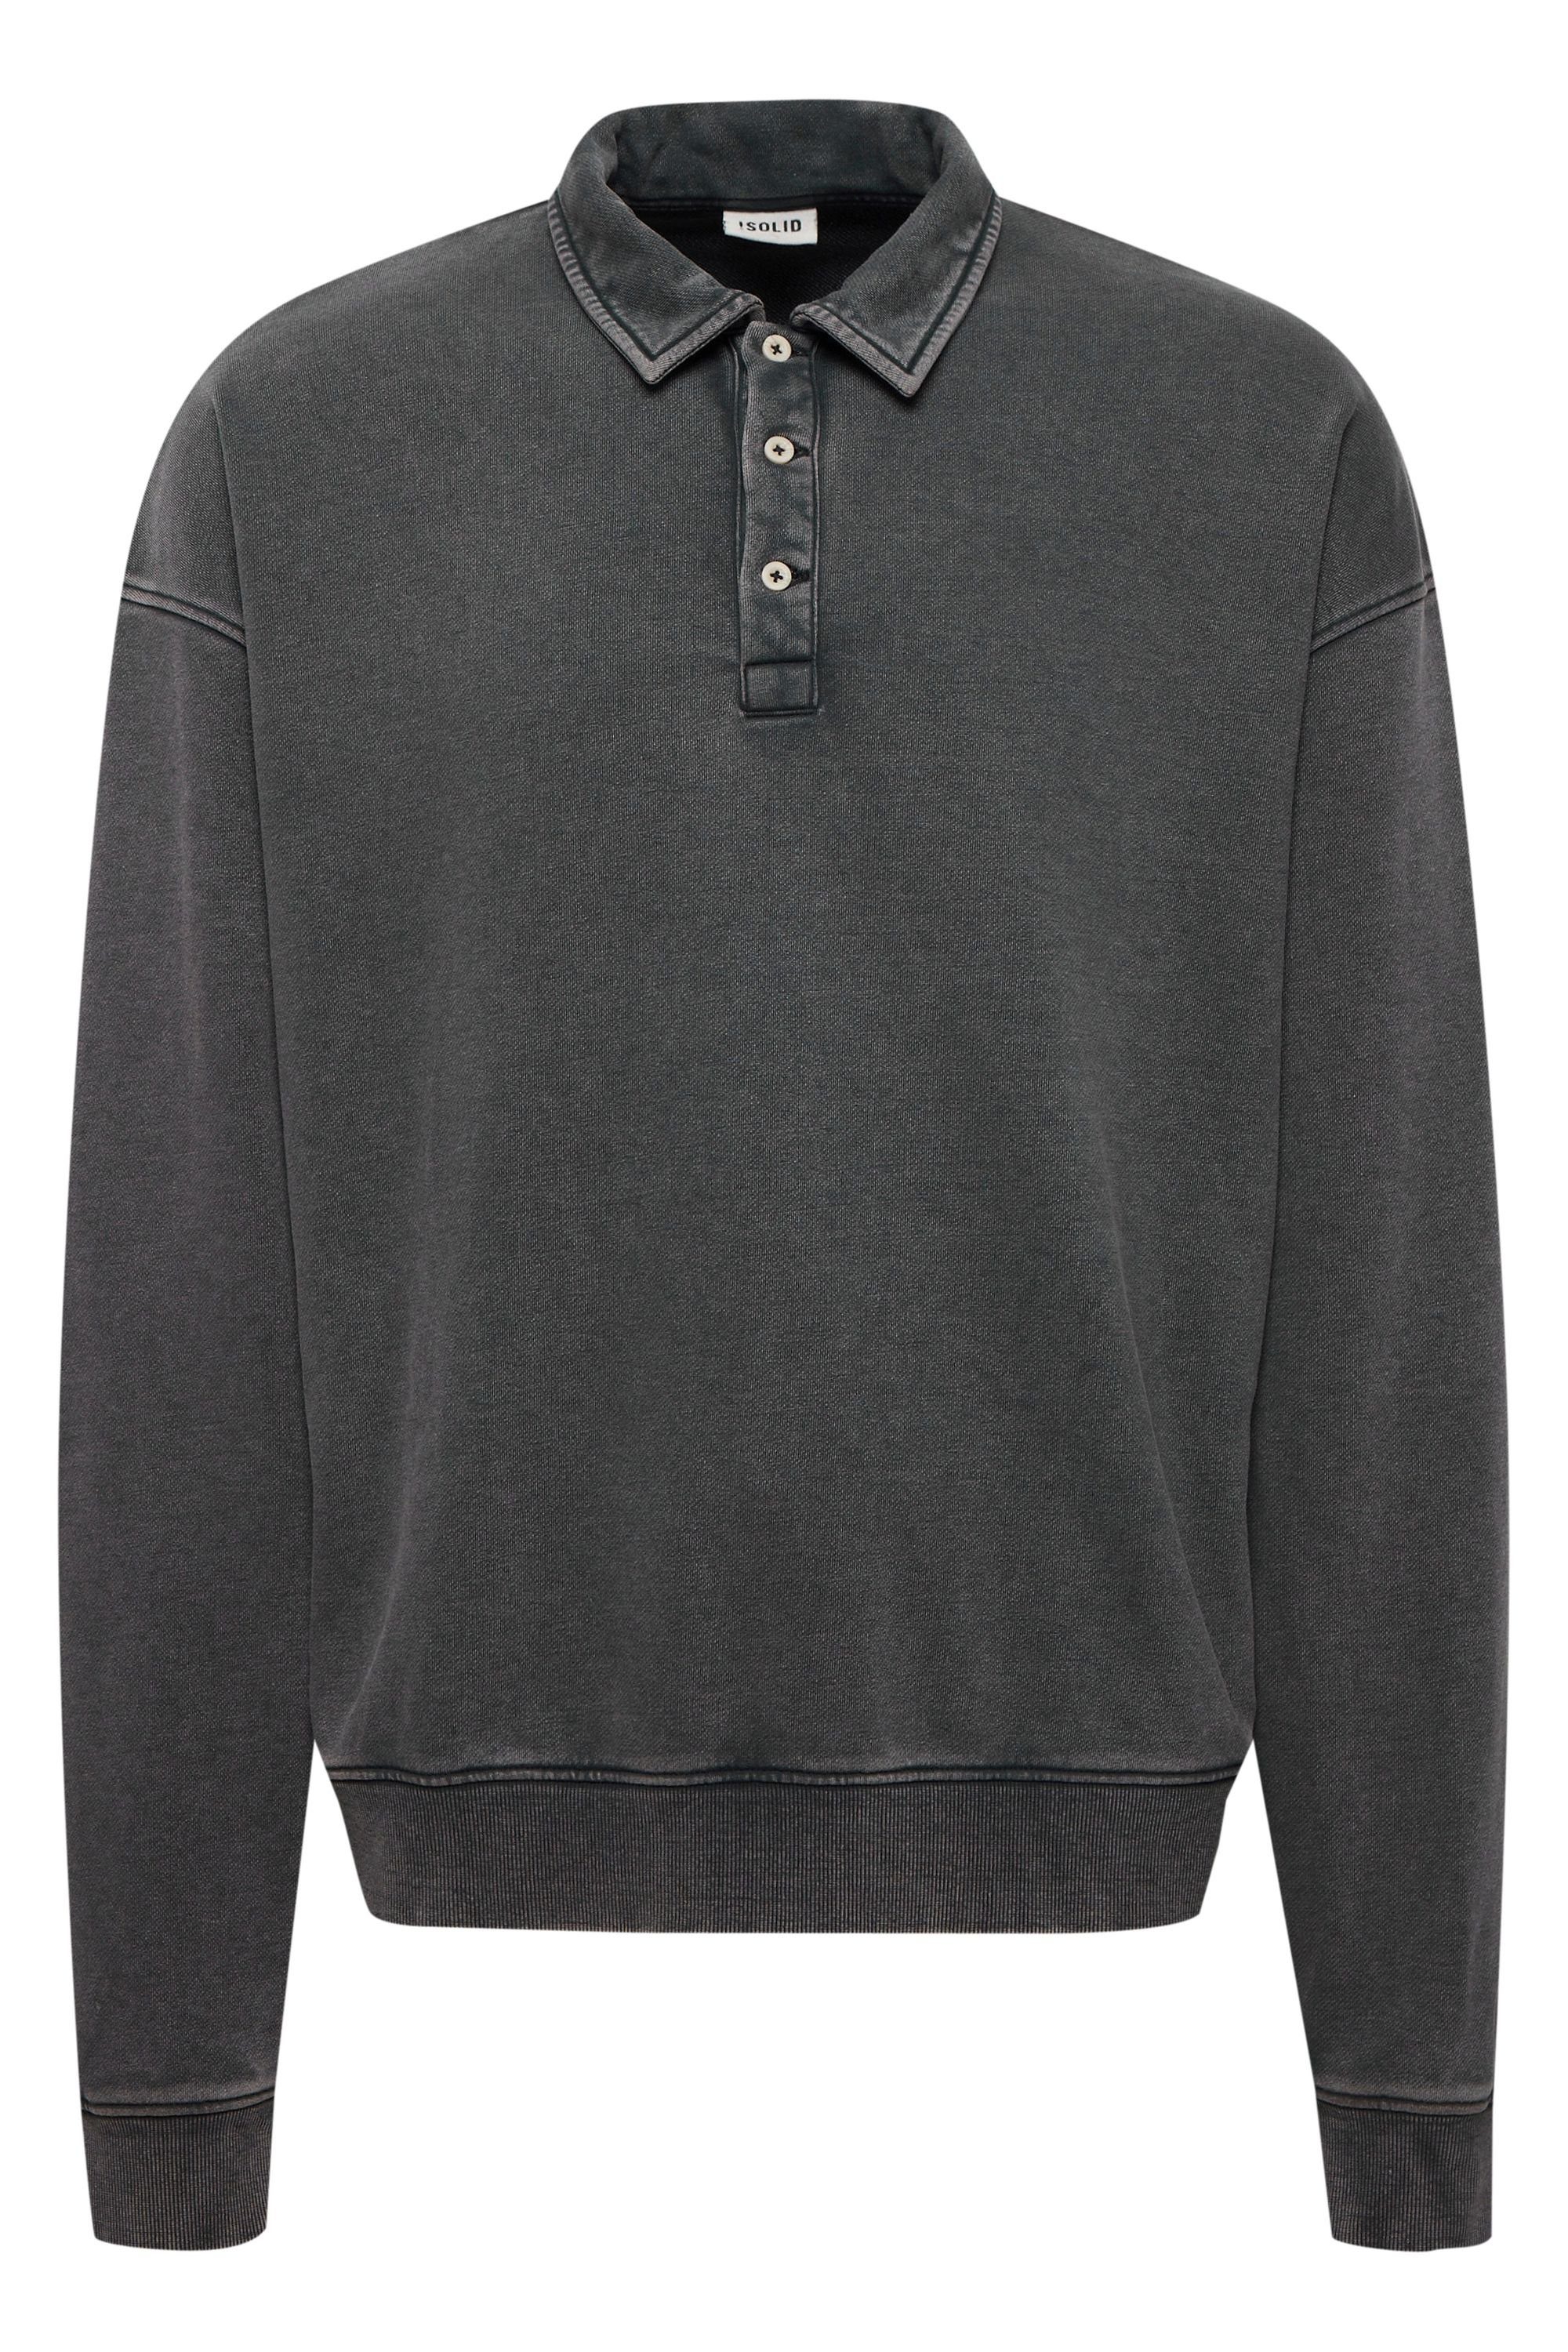 (194008) Sweatshirt - True Black SDGaspard !Solid 21107862